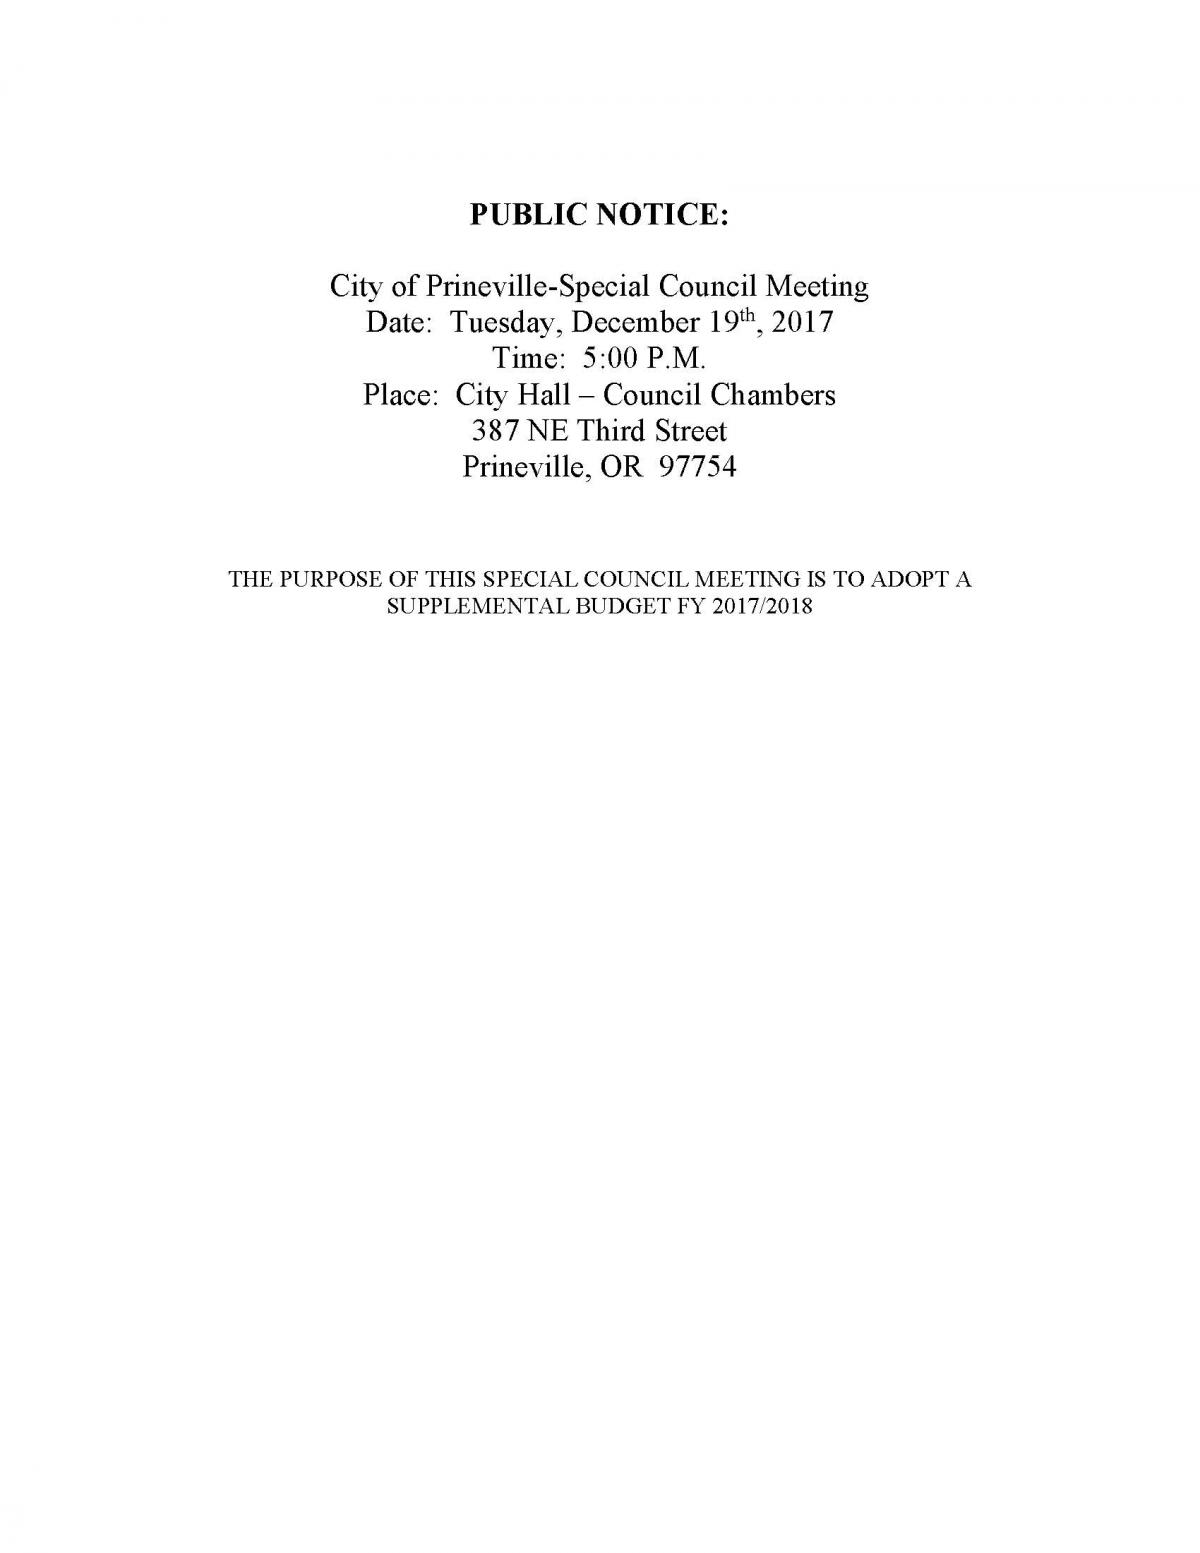 Public Notice - Special Council Meeting 12-19-17